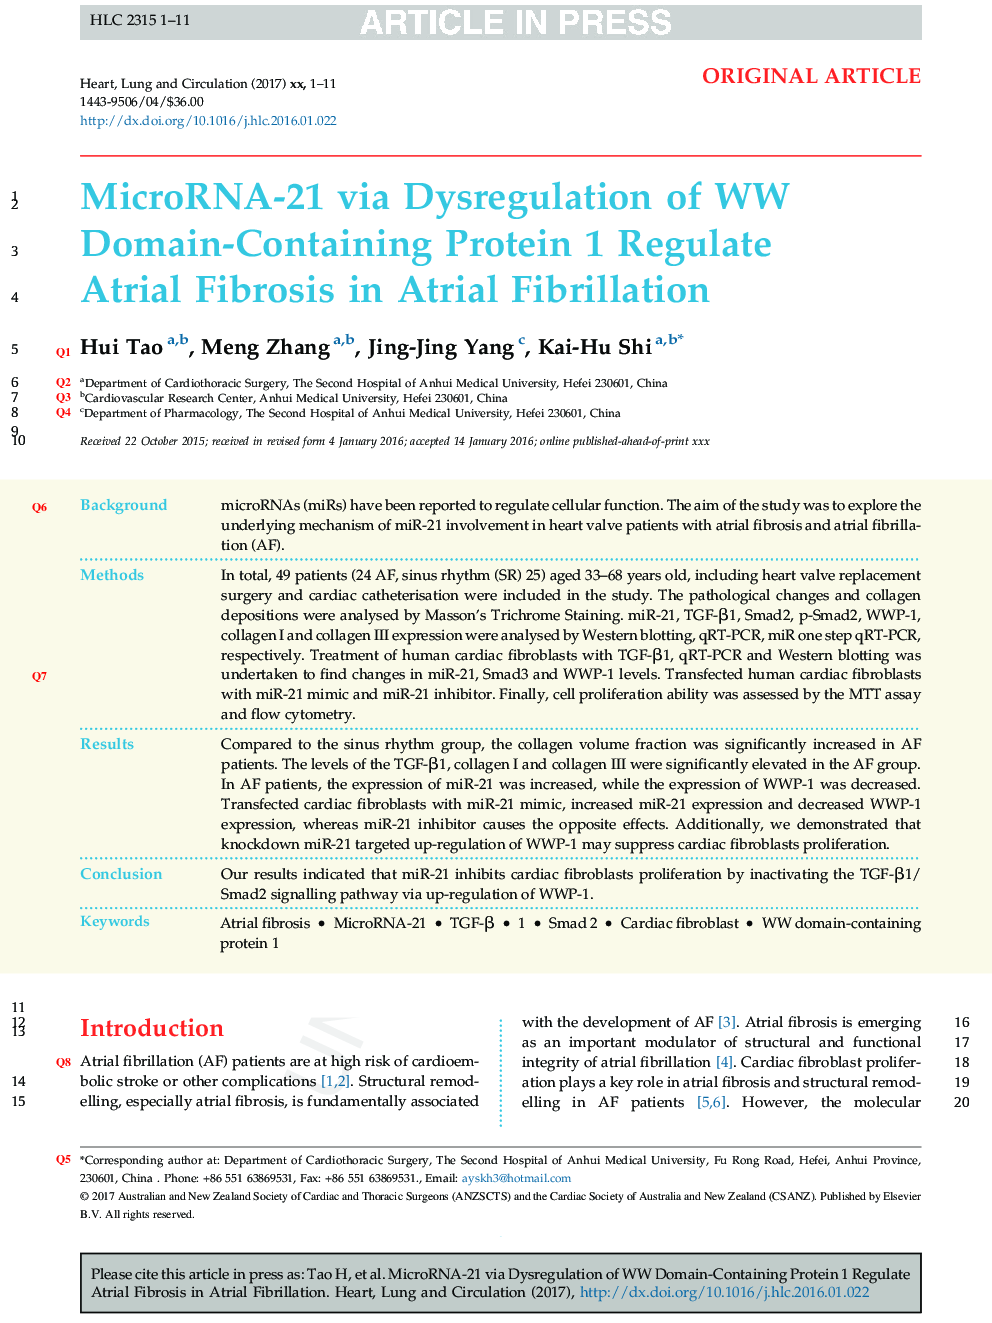 MicroRNA-21 via Dysregulation of WW Domain-Containing Protein 1 Regulate Atrial Fibrosis in Atrial Fibrillation